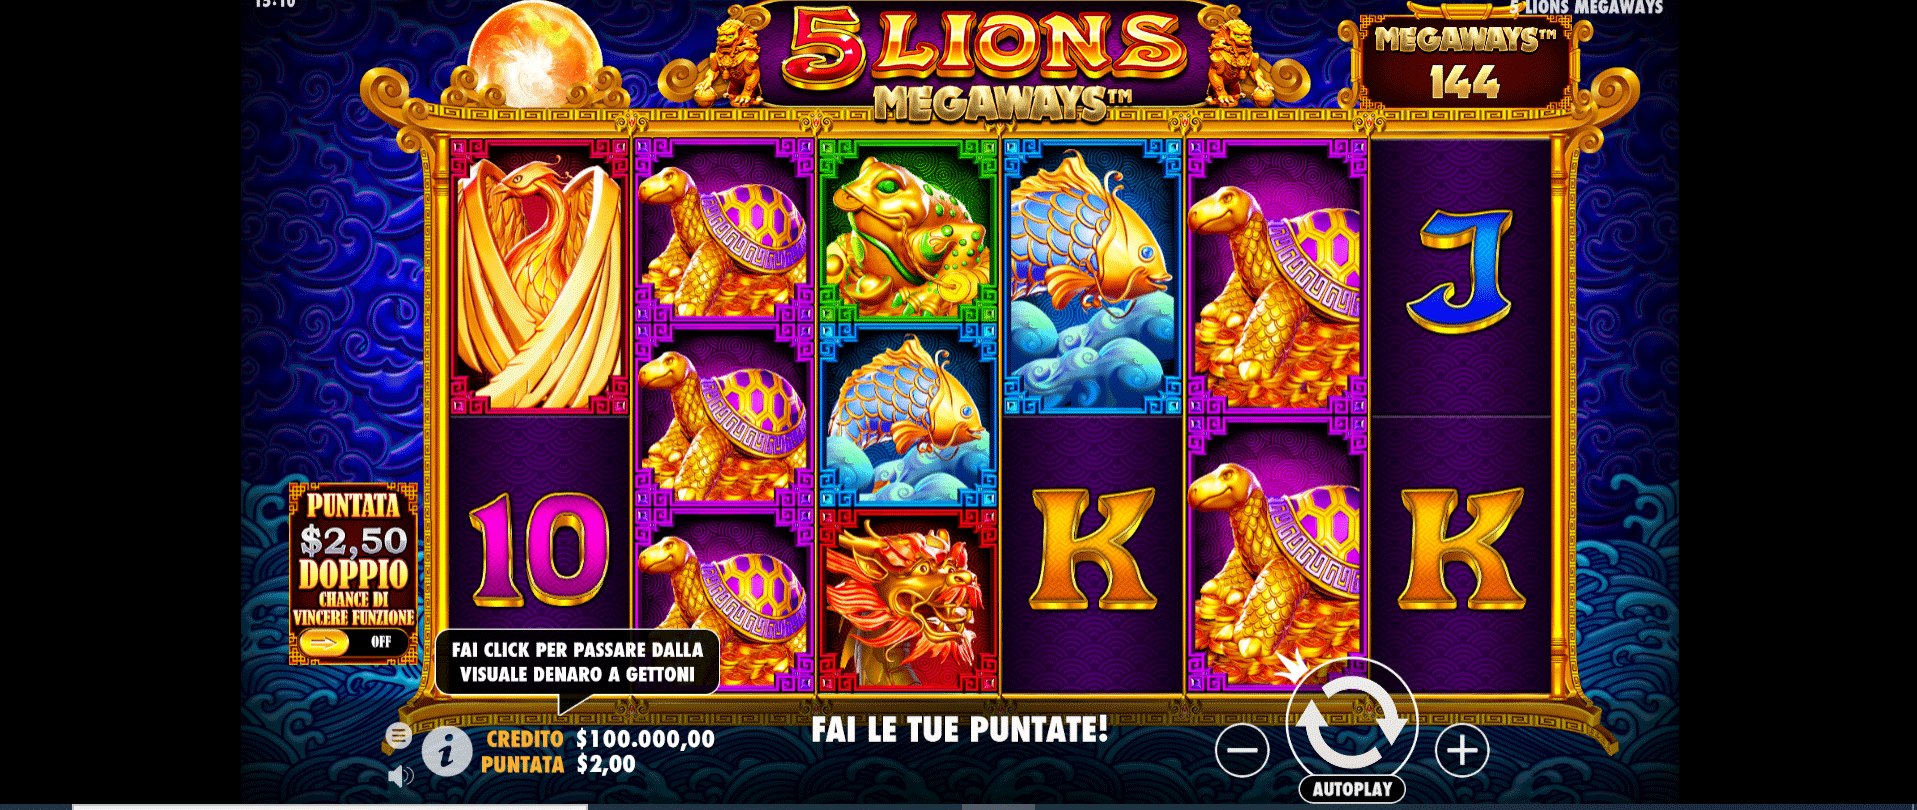 griglia slot machine 5 lions megaways